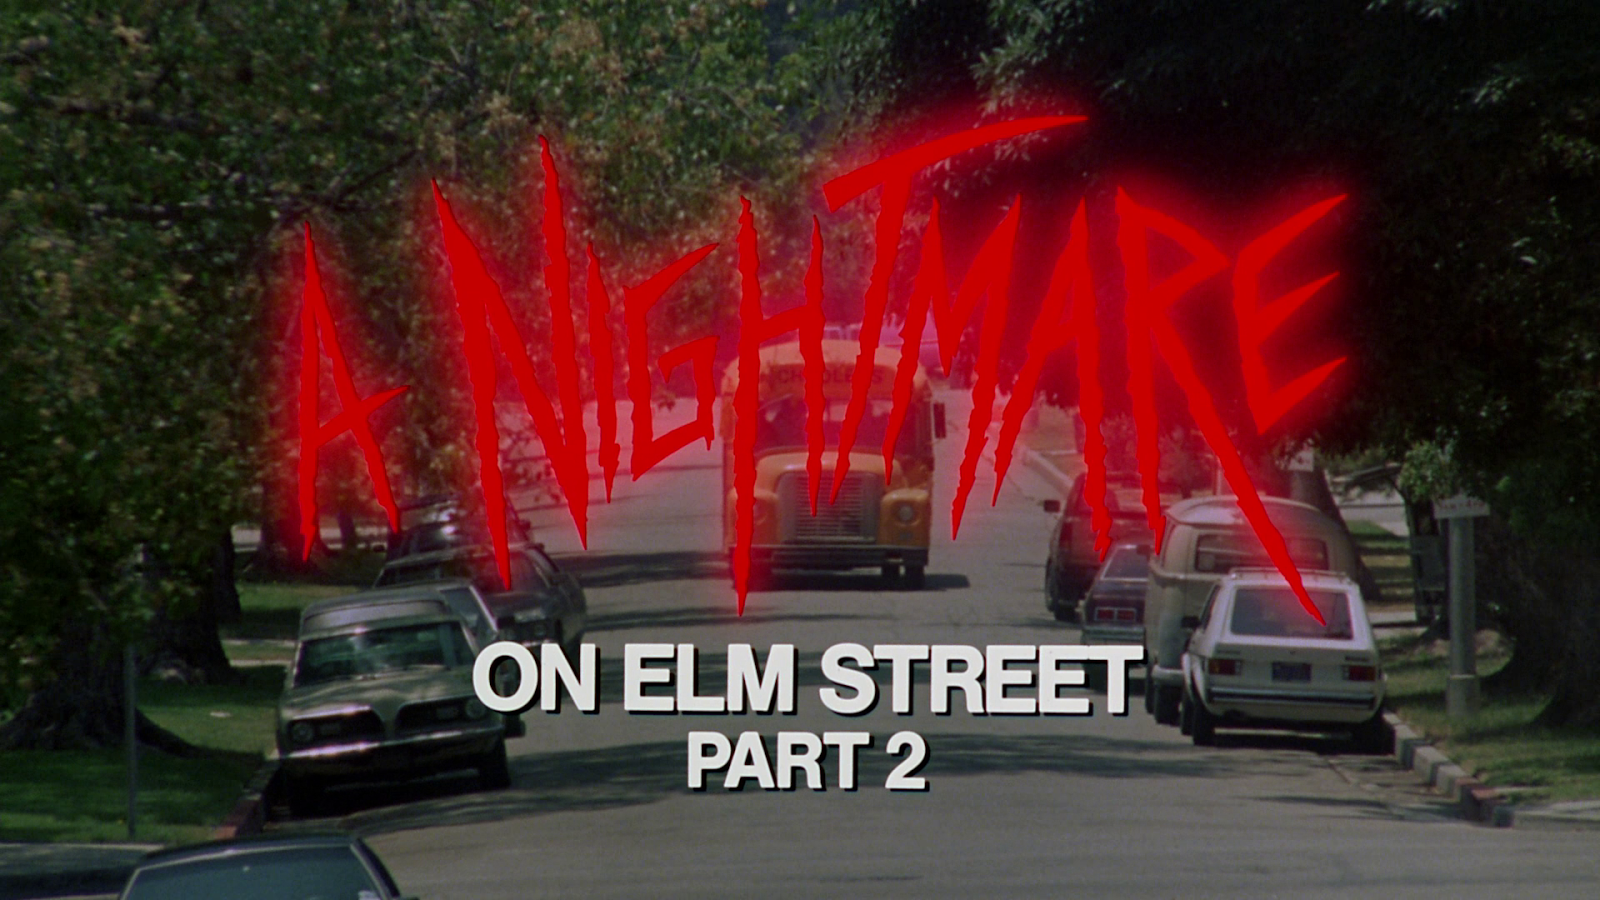 A Wet Dream On Elm Street